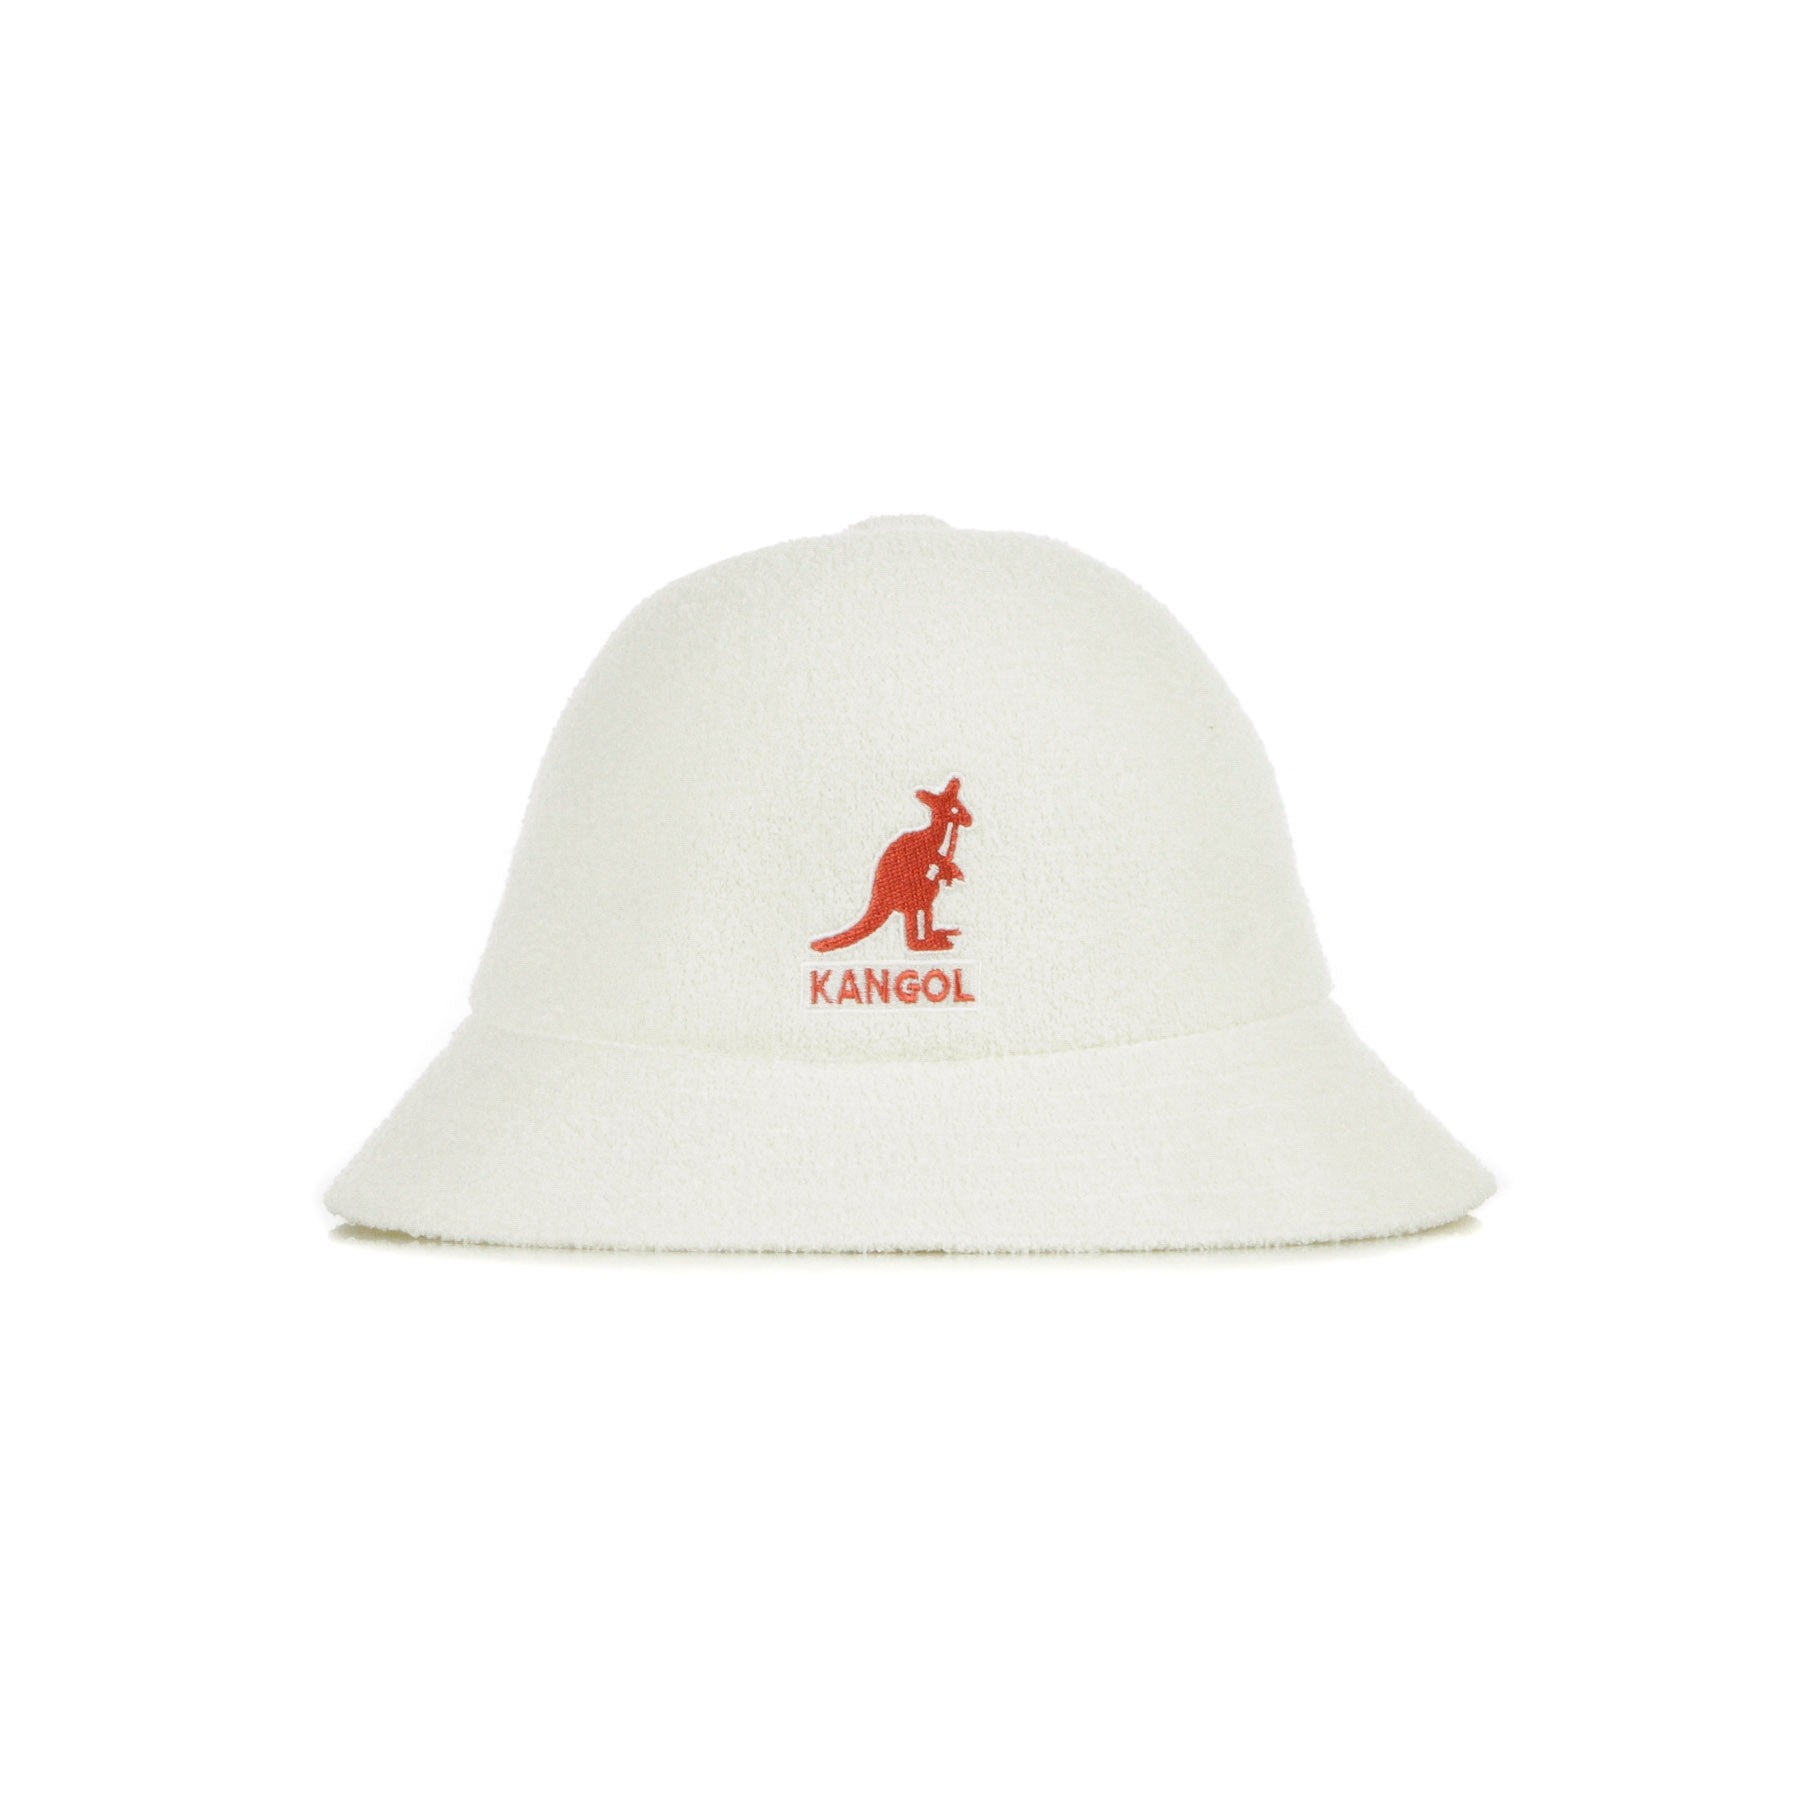 Men's Bucket Hat Big Logo Casual White